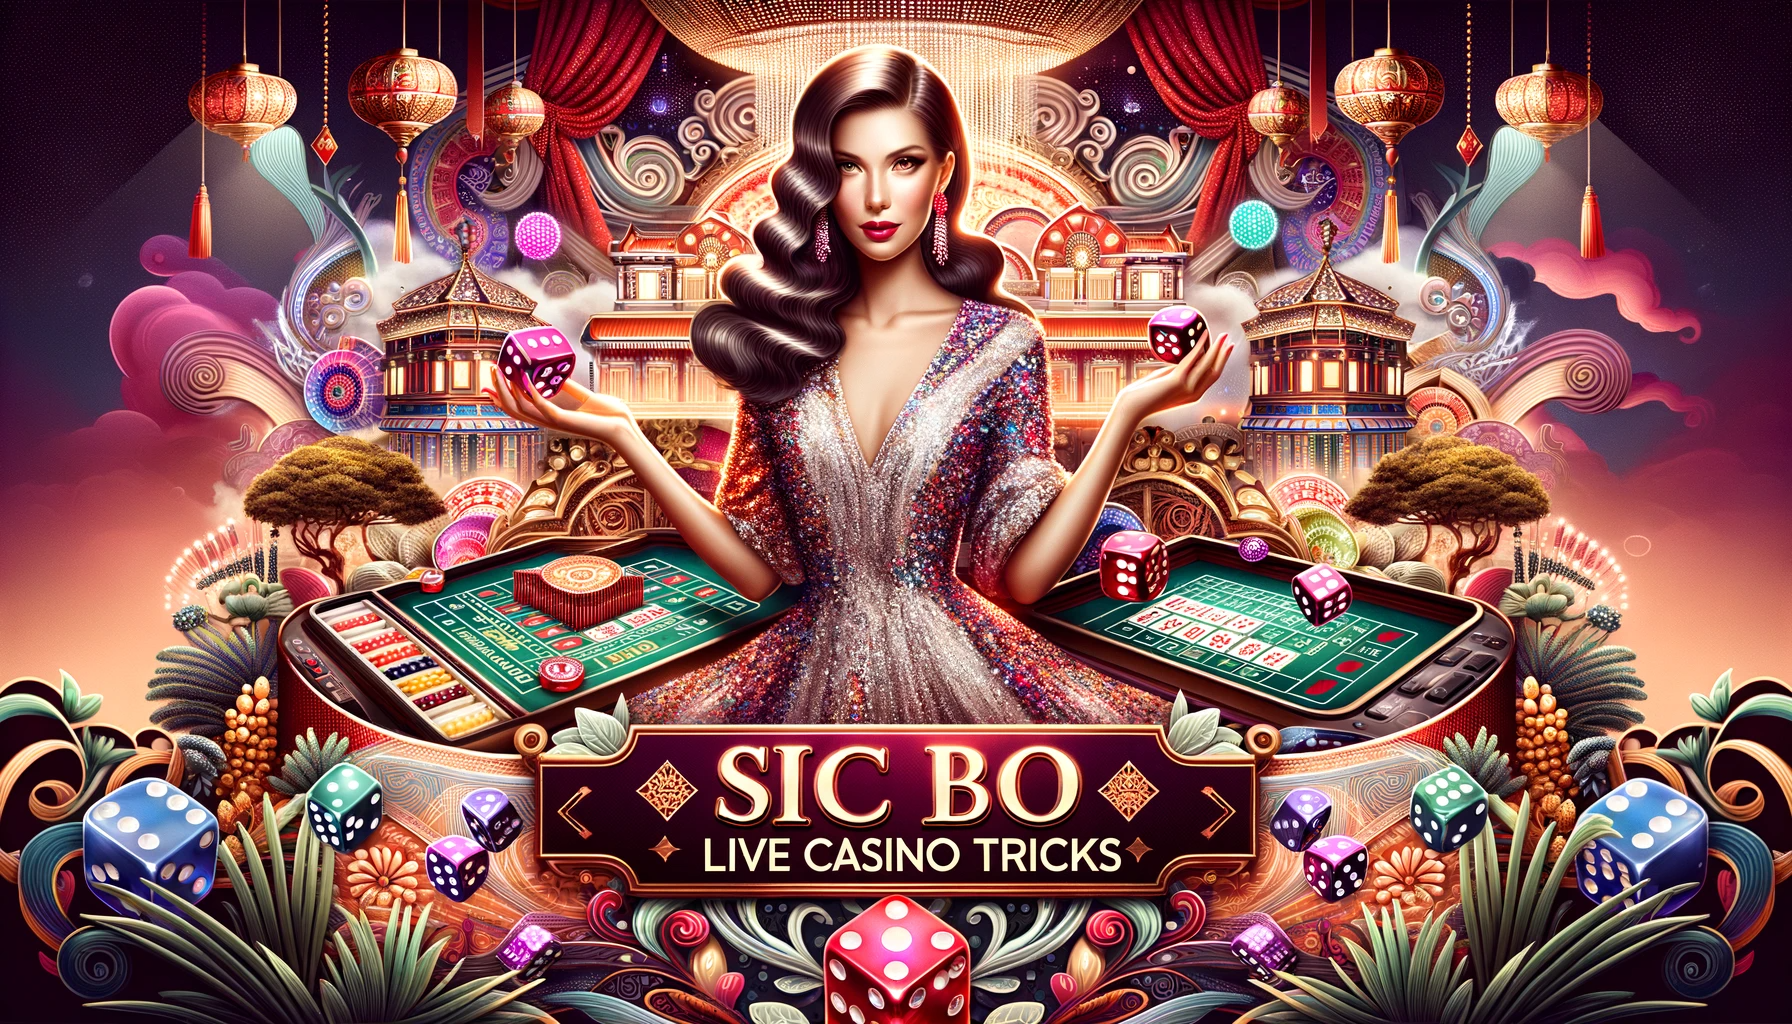 Sic Bo live casino tricks